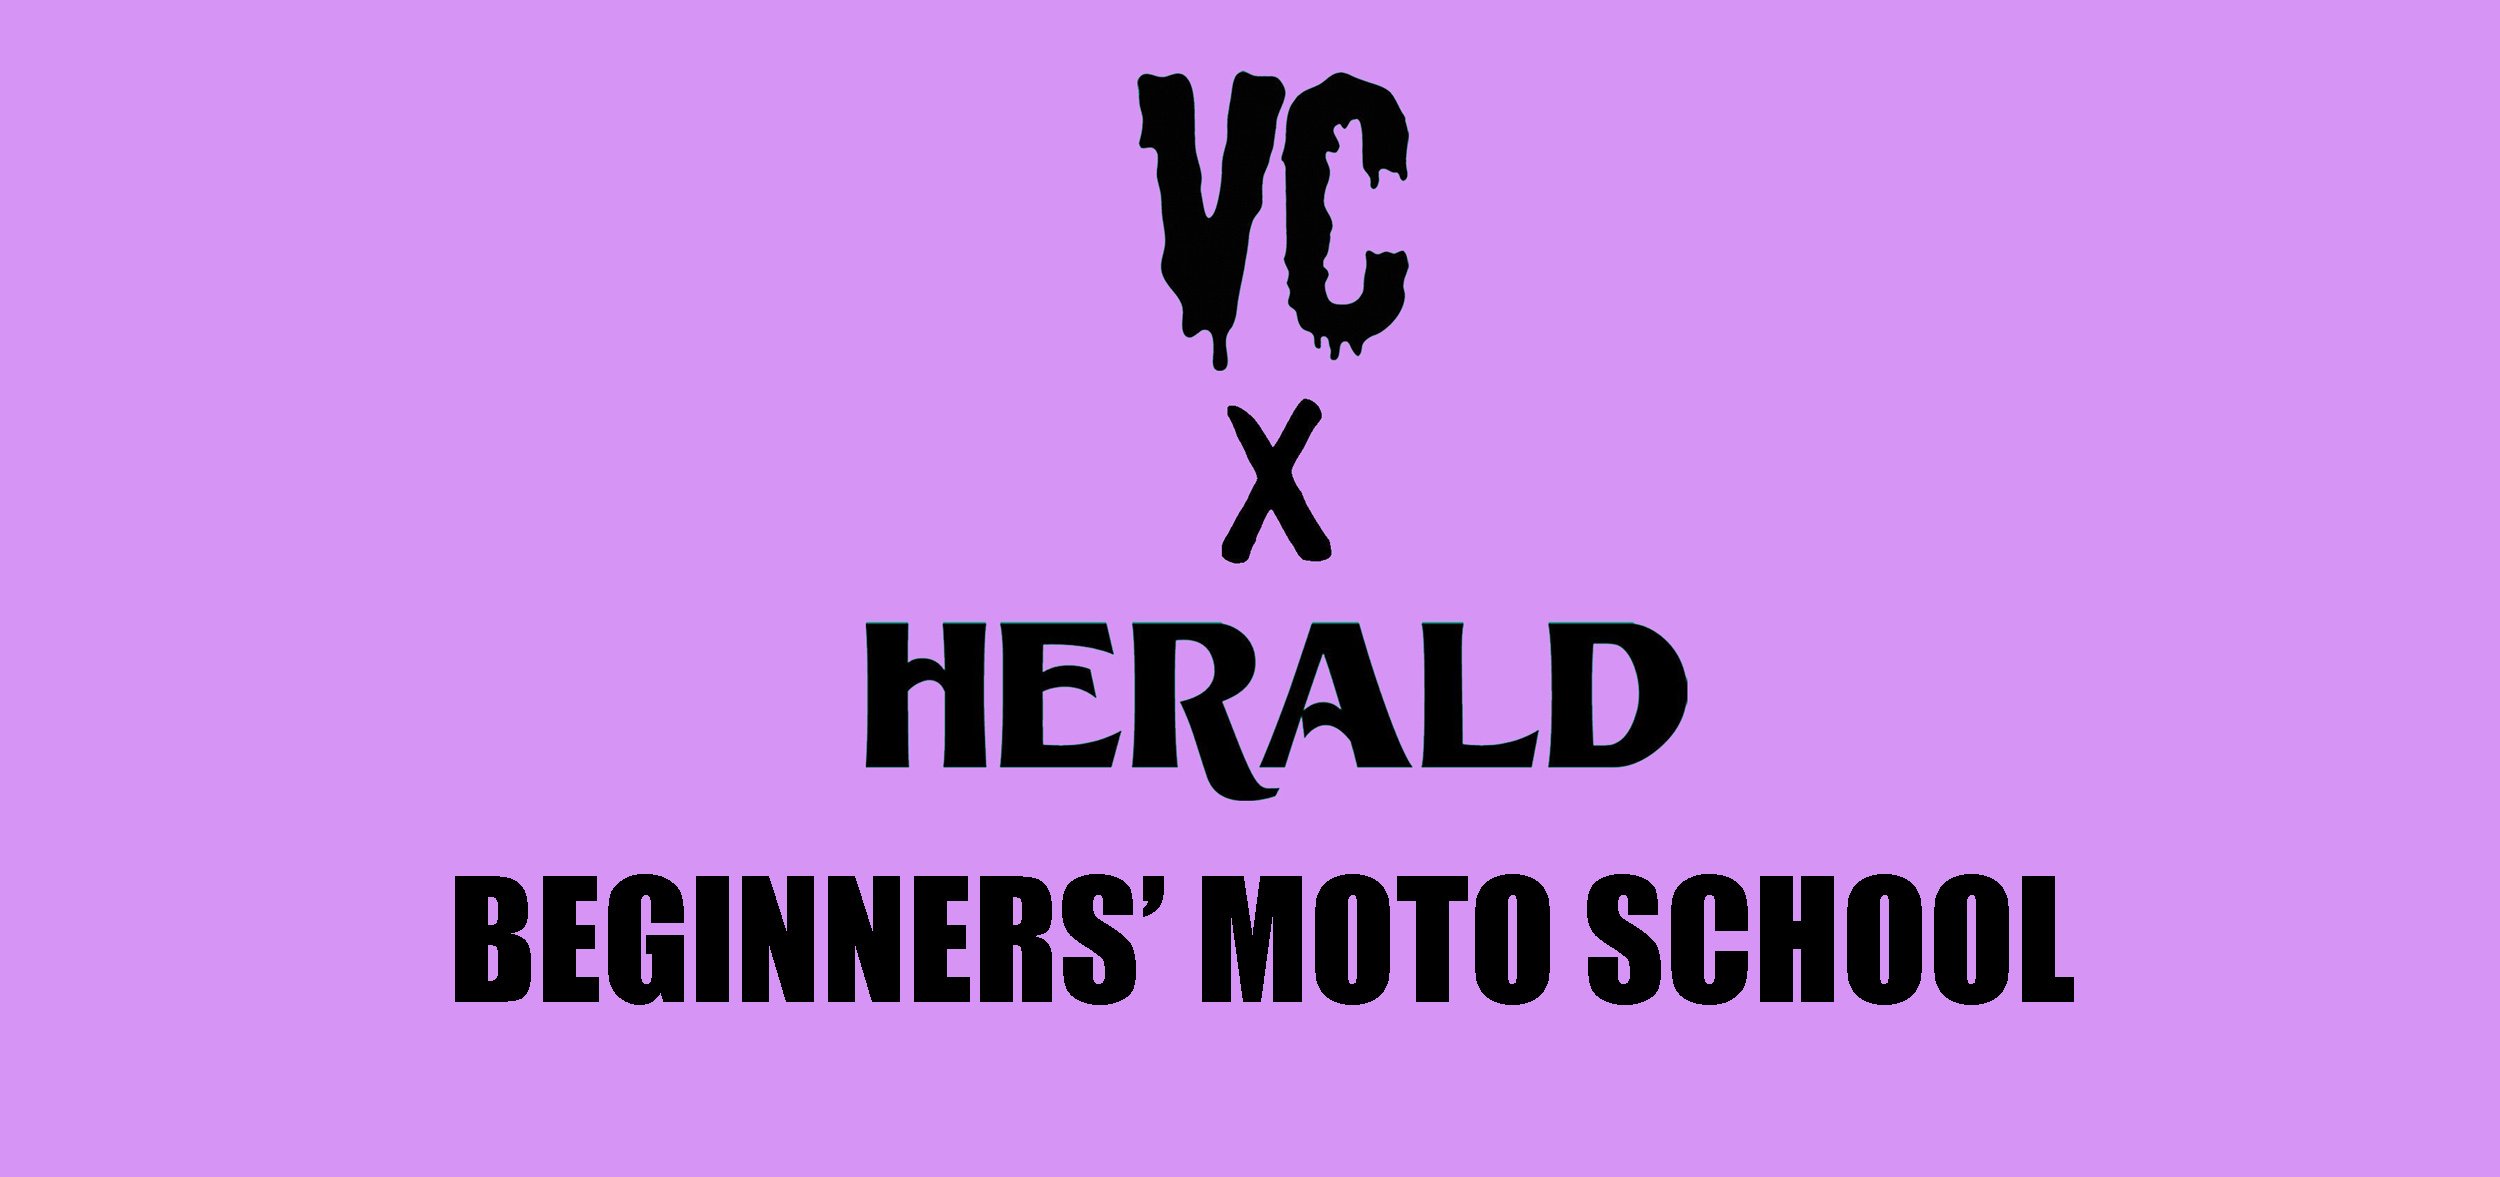 VC+X+HERALD+MOTO+BEGINNERS+SCHOOL copy.jpg